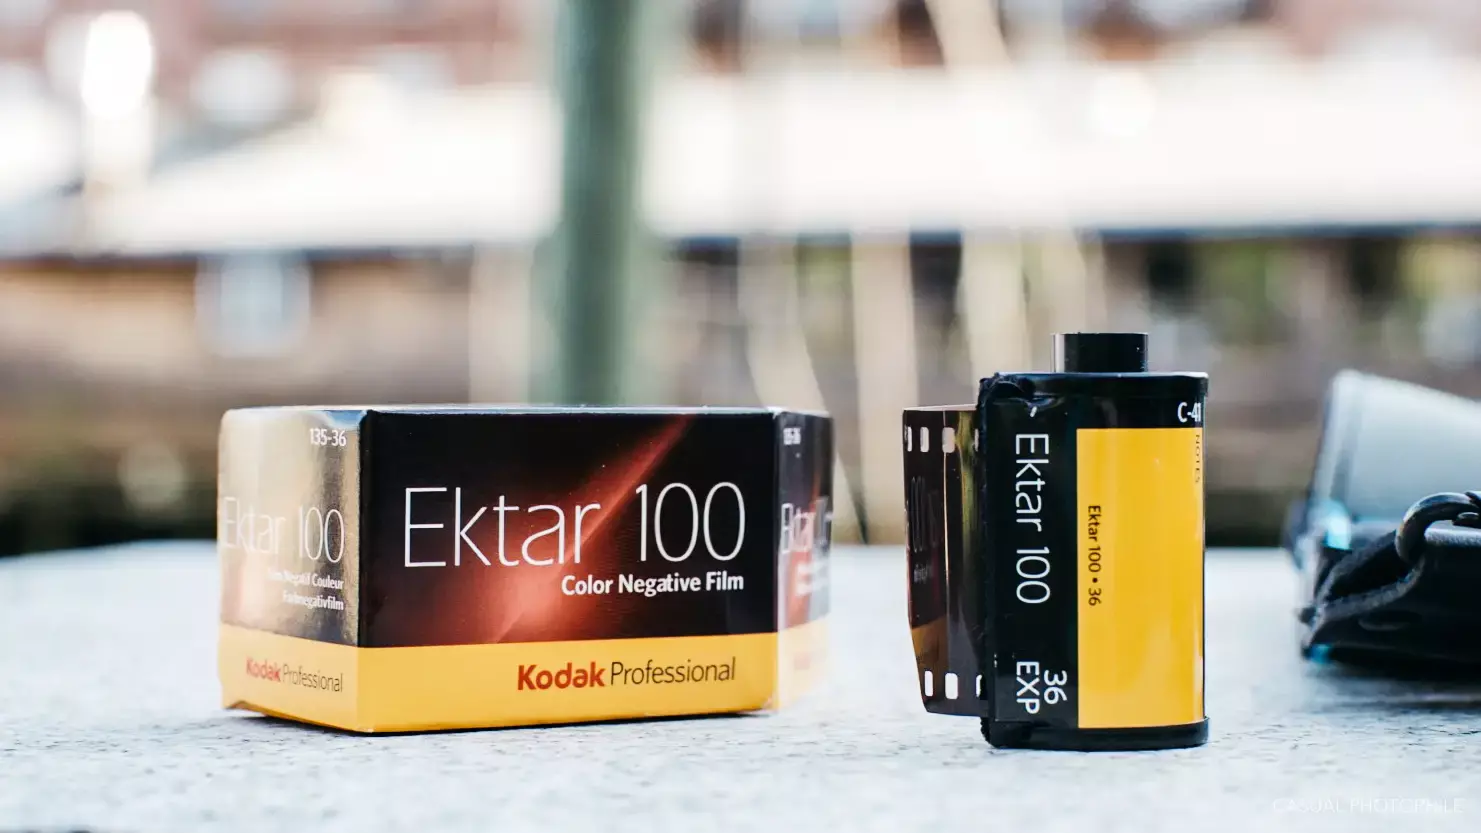 Kodak Ektar 100, Kodak Camera with Film